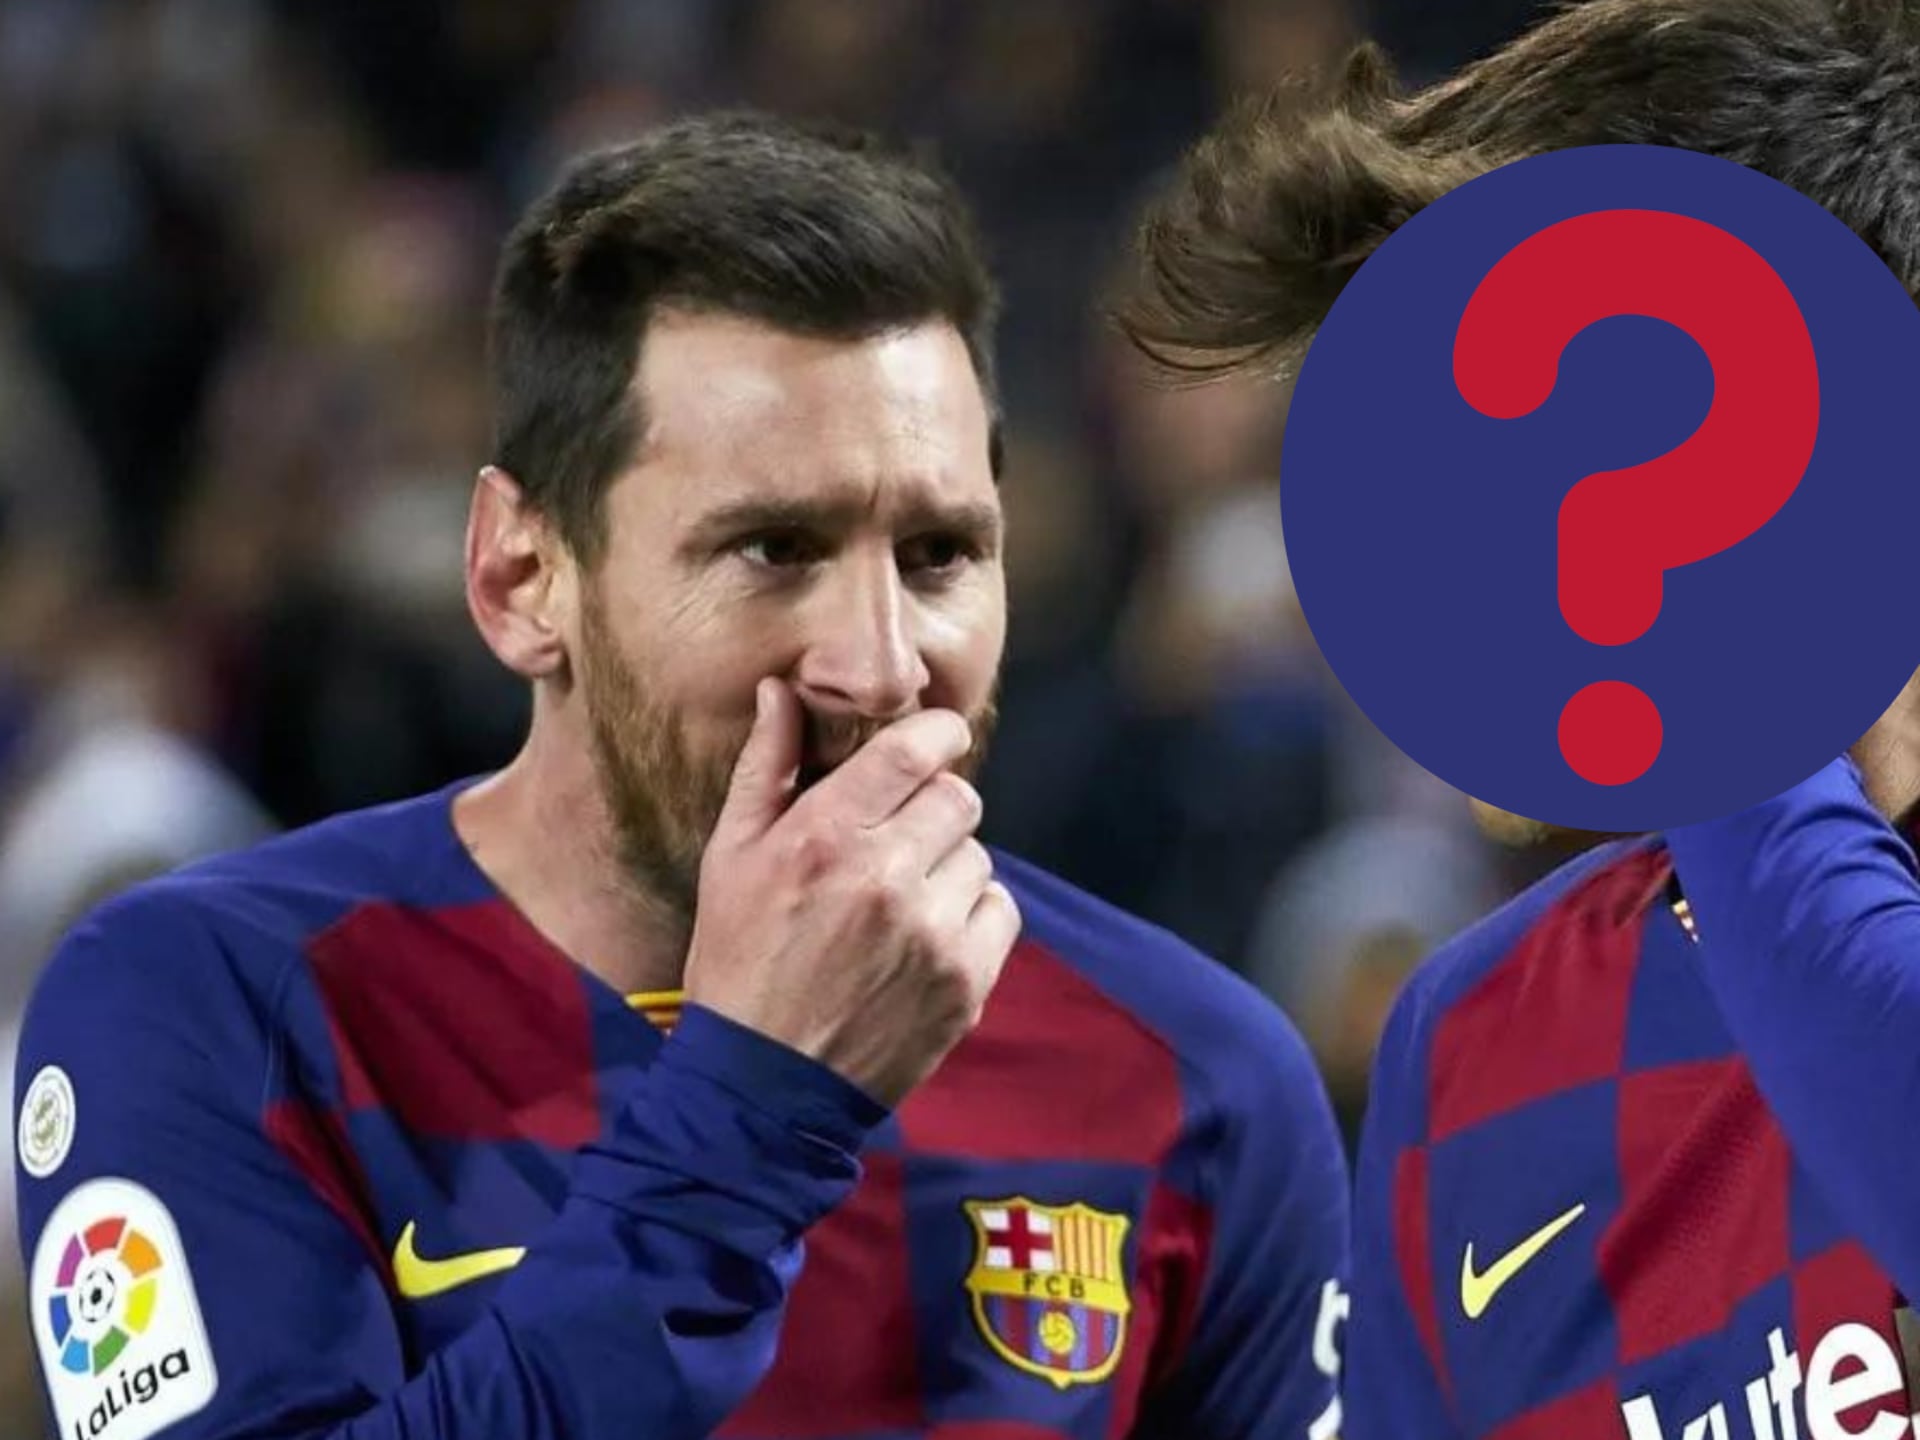 De ser el sucesor de Xavi en el Barcelona a jugar contra Messi en la MLS